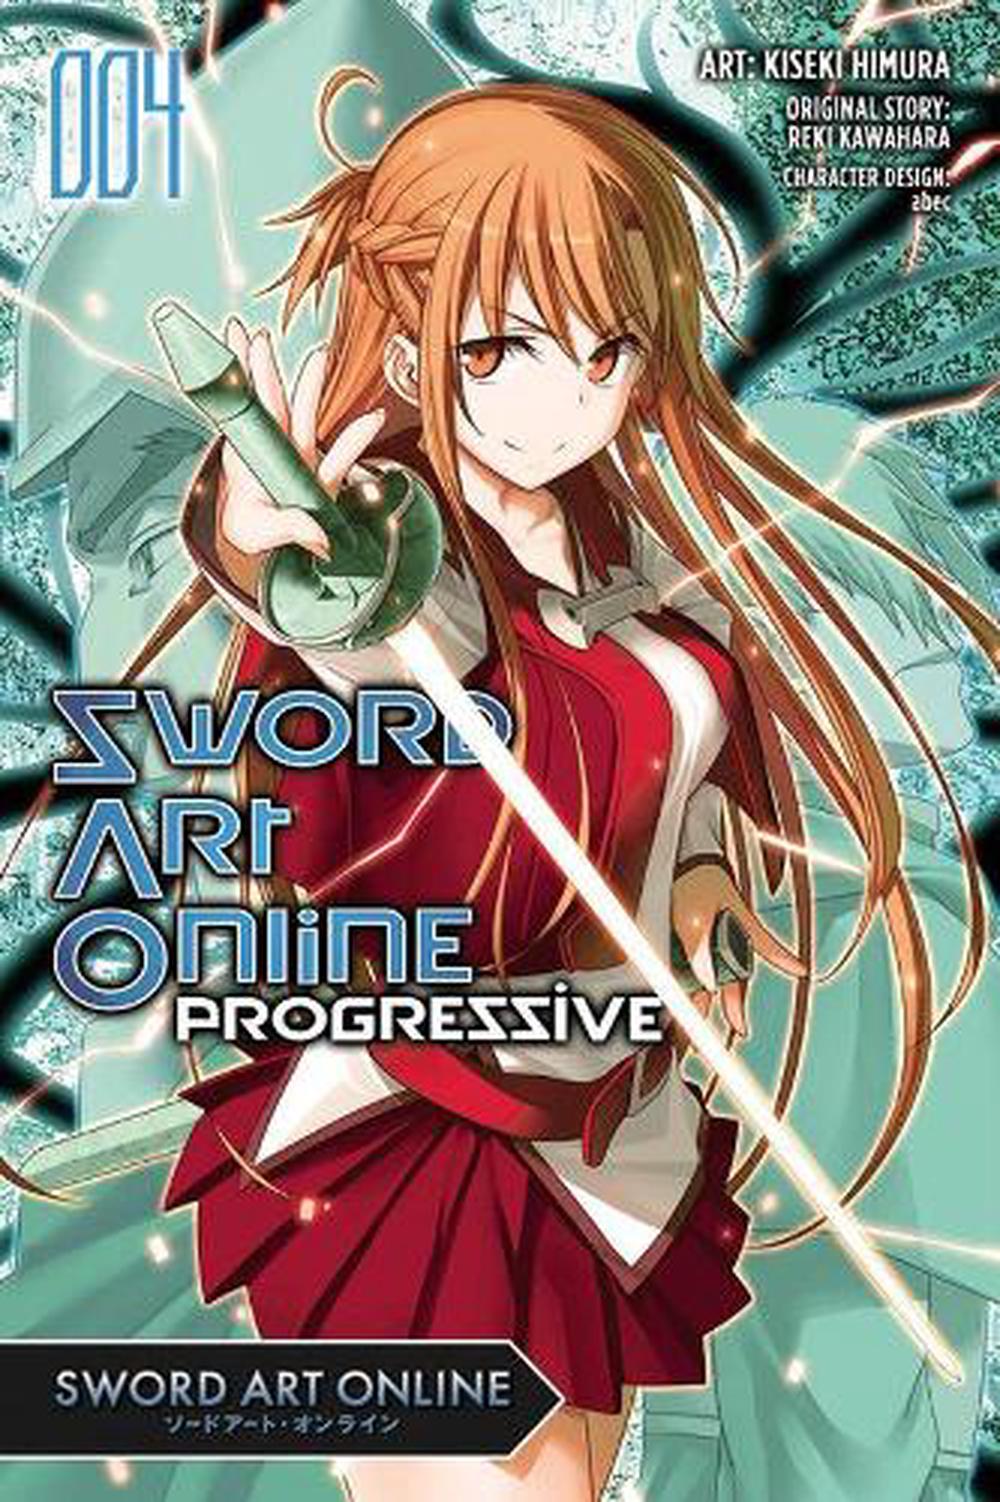 Sword Art Online Progressive, Volume 4 by Reki Kawahara